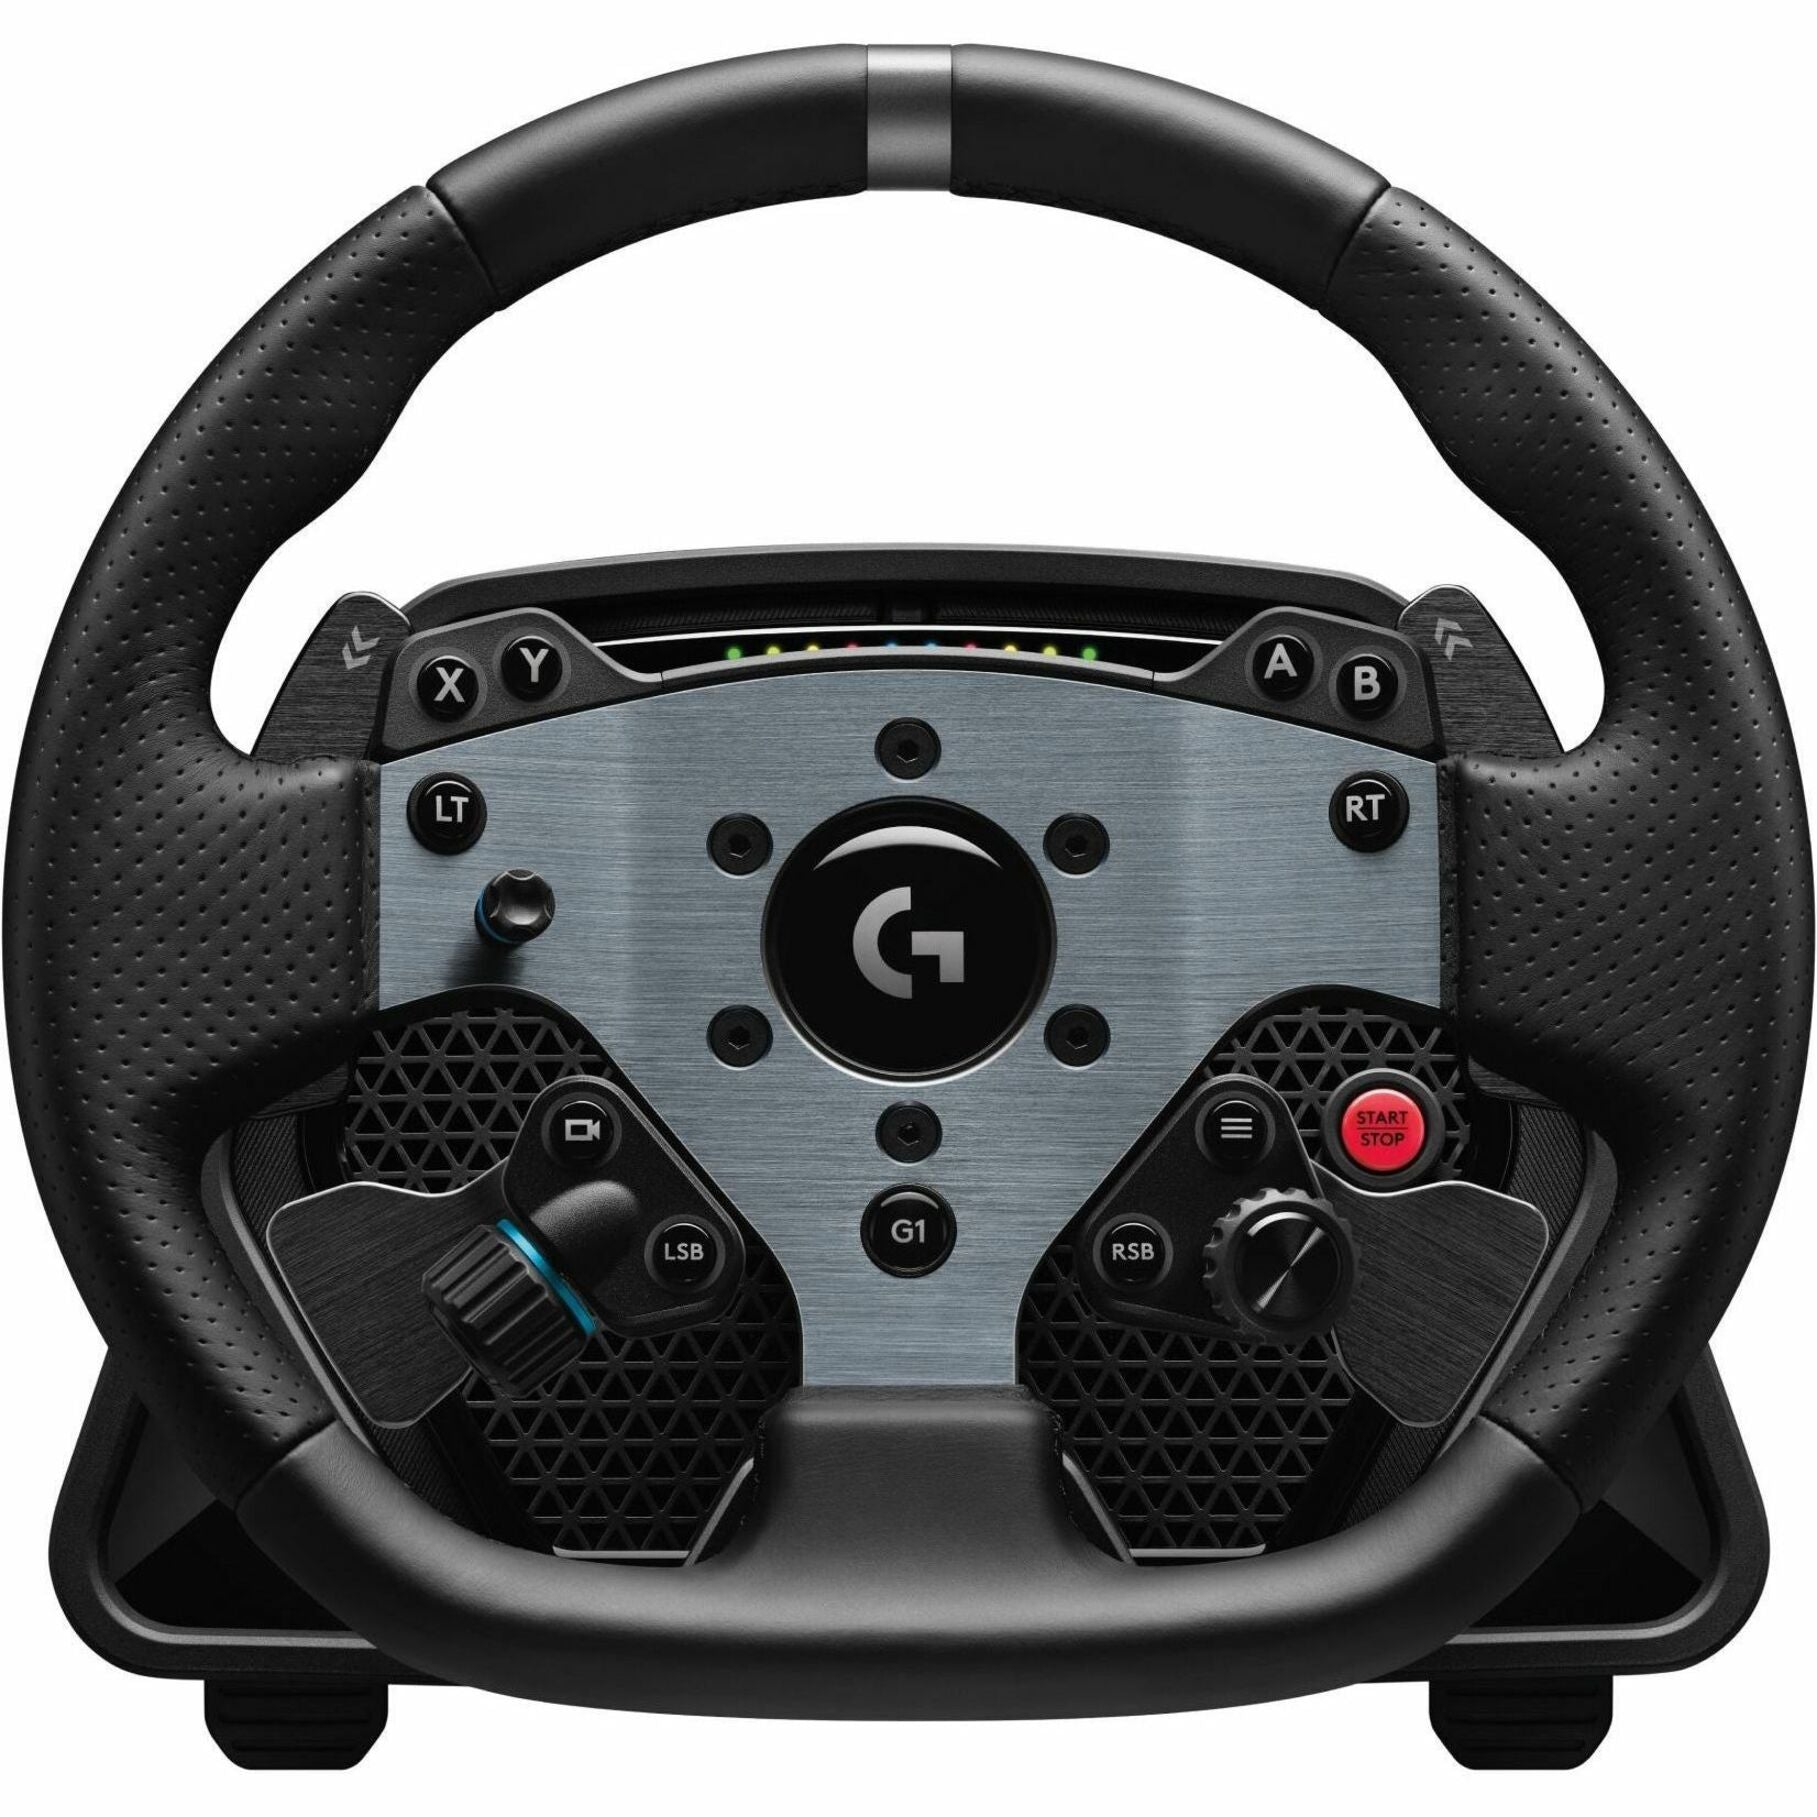 Logitech G 941-000215 Pro Racing Wheel, USB PC Gaming Steering Wheel